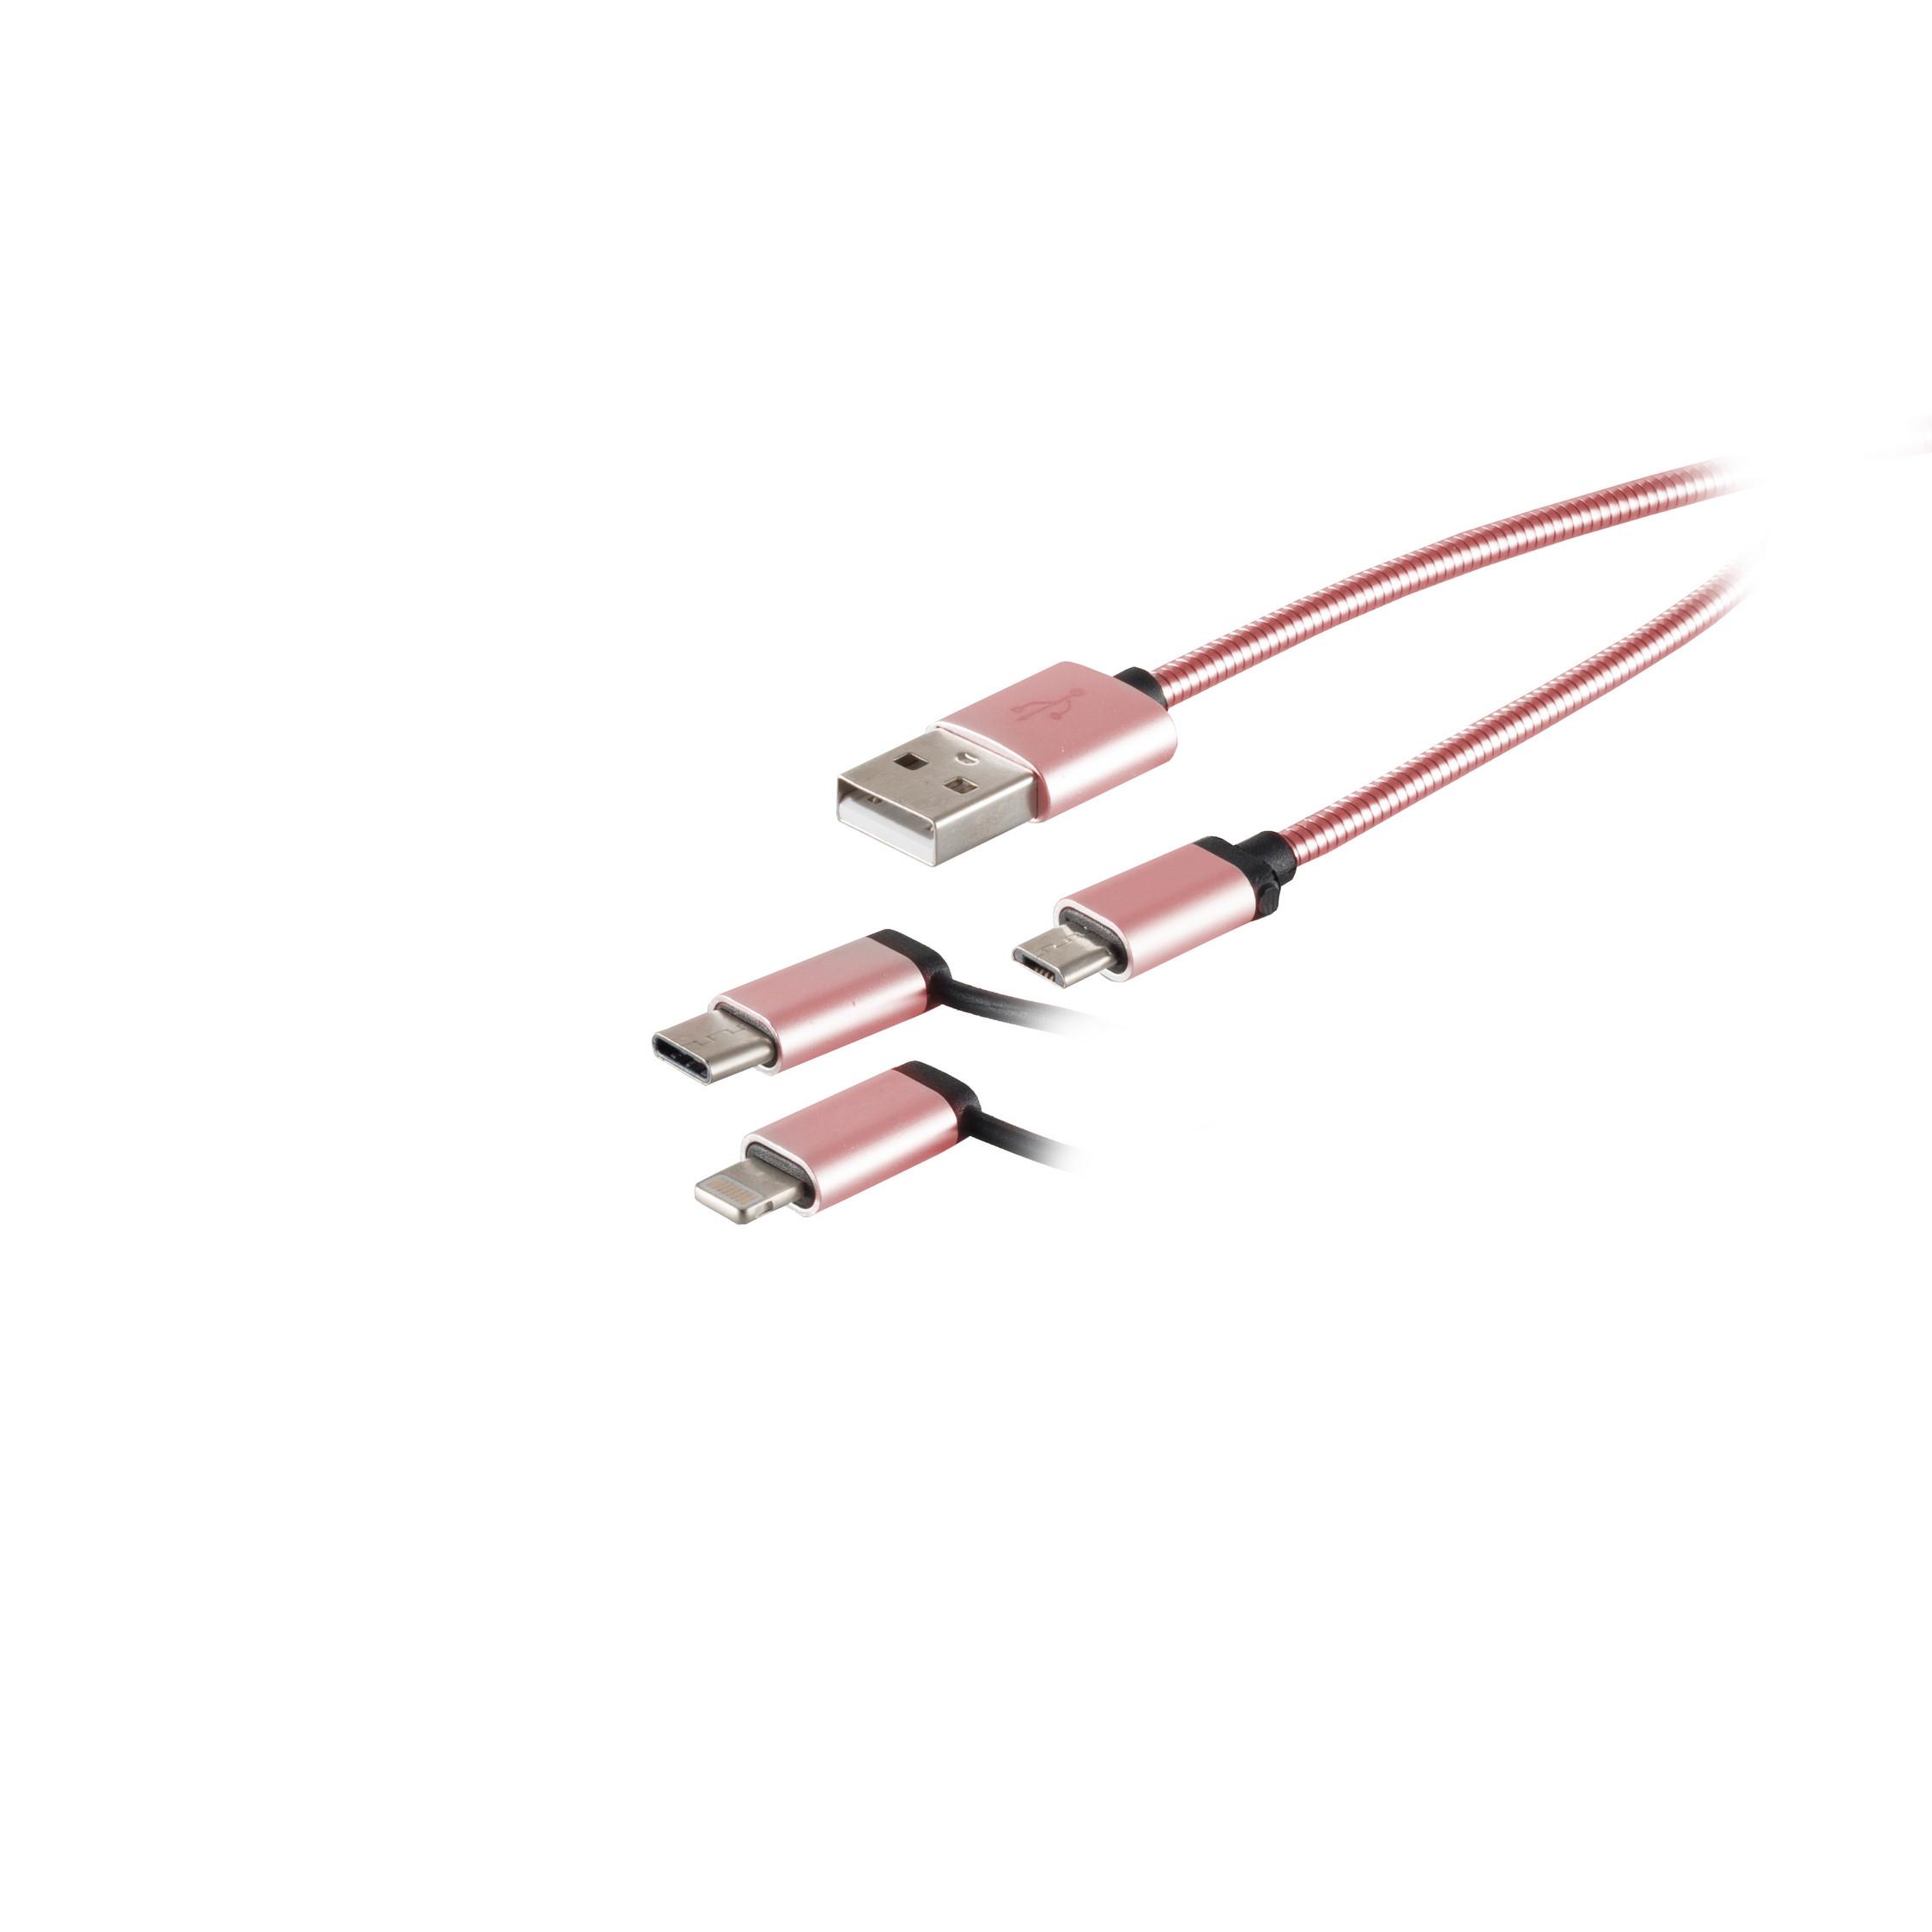 Stecker CONNECTIVITY 1m Ladekabel 3in1 S/CONN USB MicroB/ Kabel 8-pin TypC/ MAXIMUM